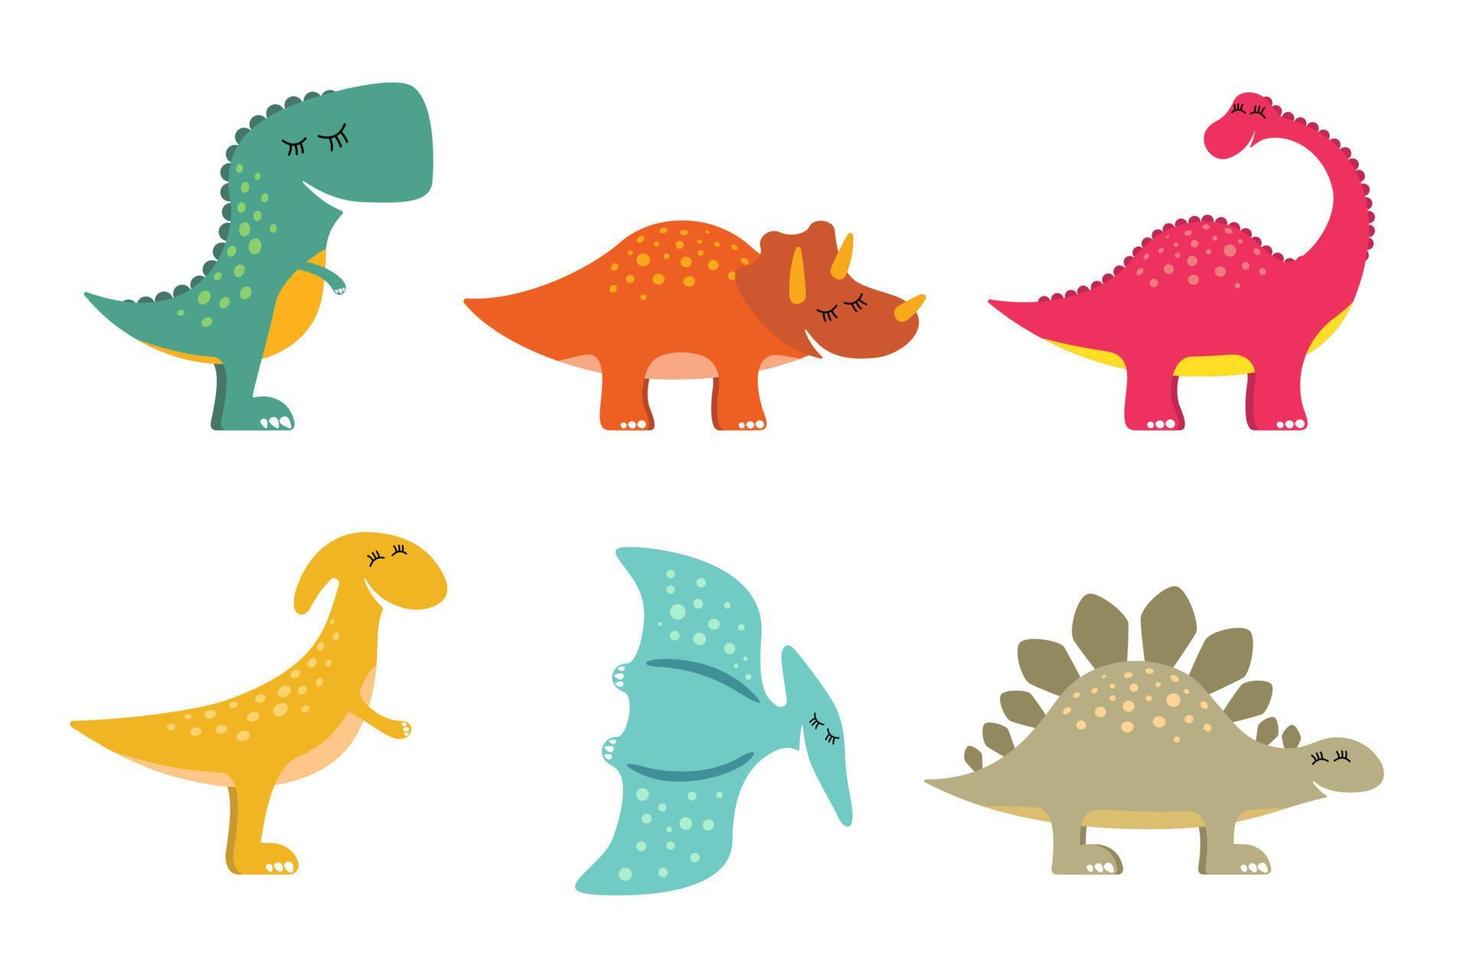 schattig kleurrijk dino set. soort glimlachen dinosaurus verzameling. tekenfilm grafisch brontosaurus, tyrannosaurus rex, pterodactylus, triceratopen, stegosaurus en parasaurolophus ontwerp. creatief hand- getrokken prints vector